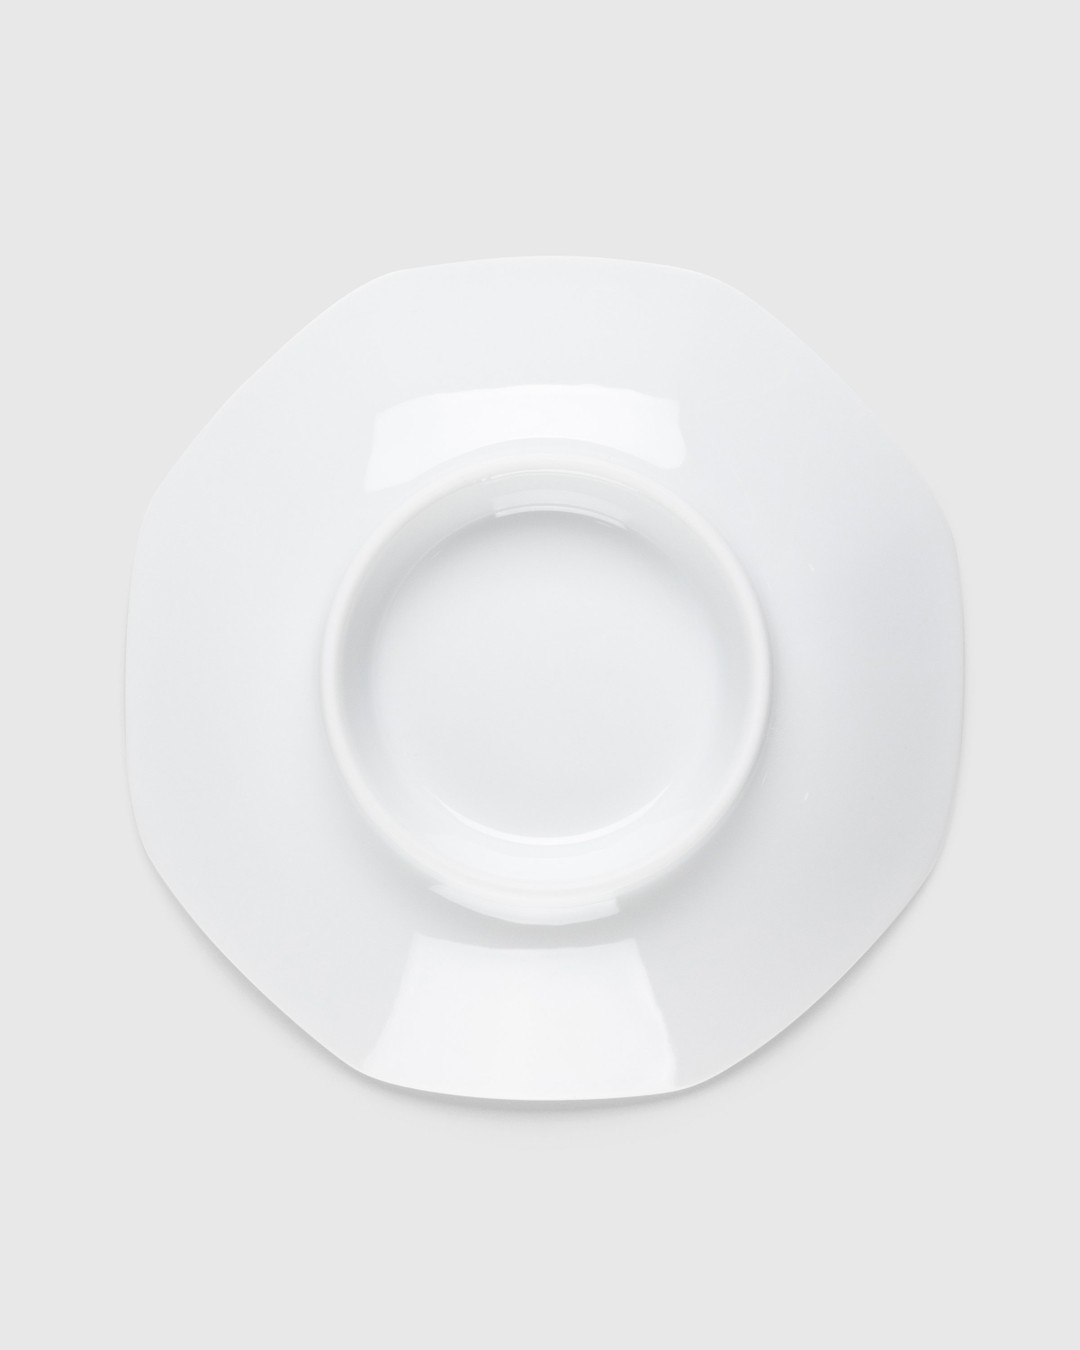 Medicom – Space Invaders Charhan Dish Multi - Ceramics - Multi - Image 3